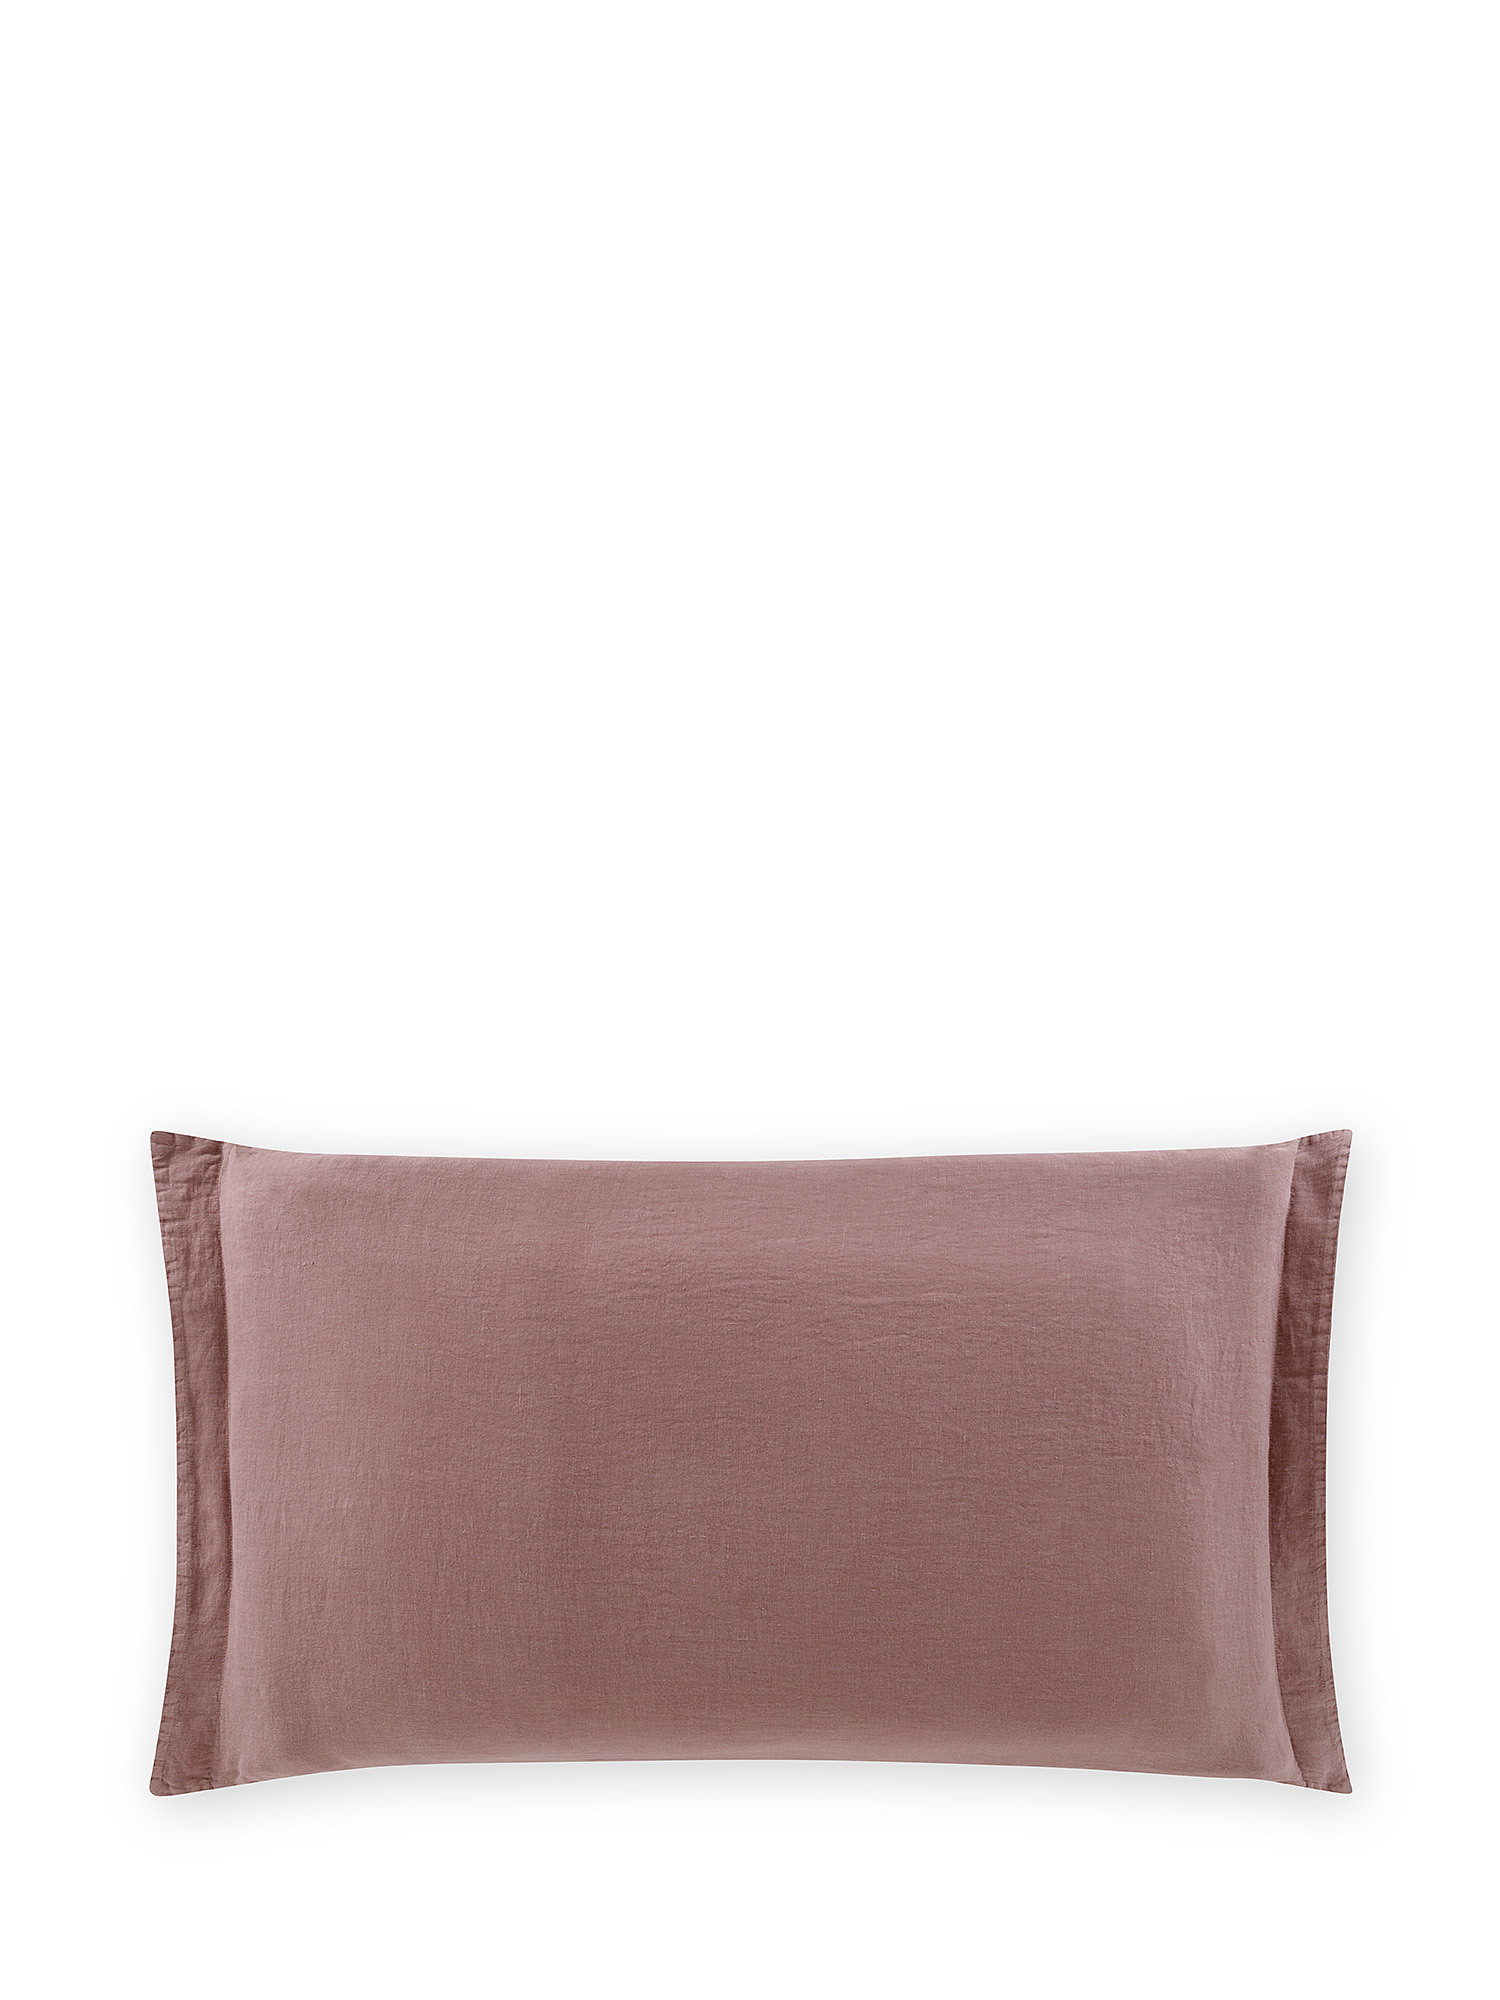 Zefiro plain color linen and cotton pillowcase, Dark Pink, large image number 0